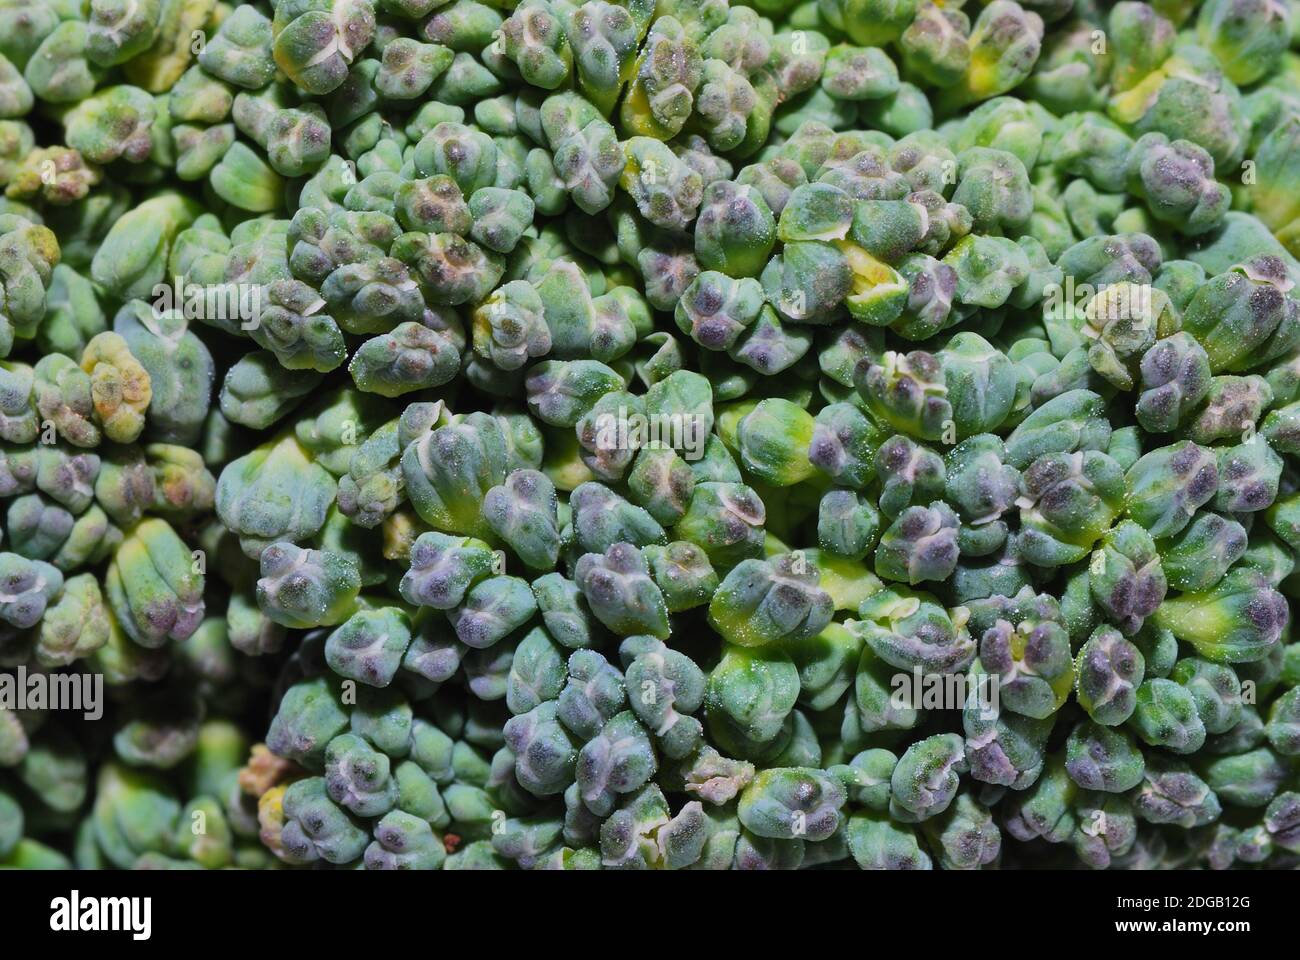 Brokoli fresh green vegetables in large view detail macro Stock Photo